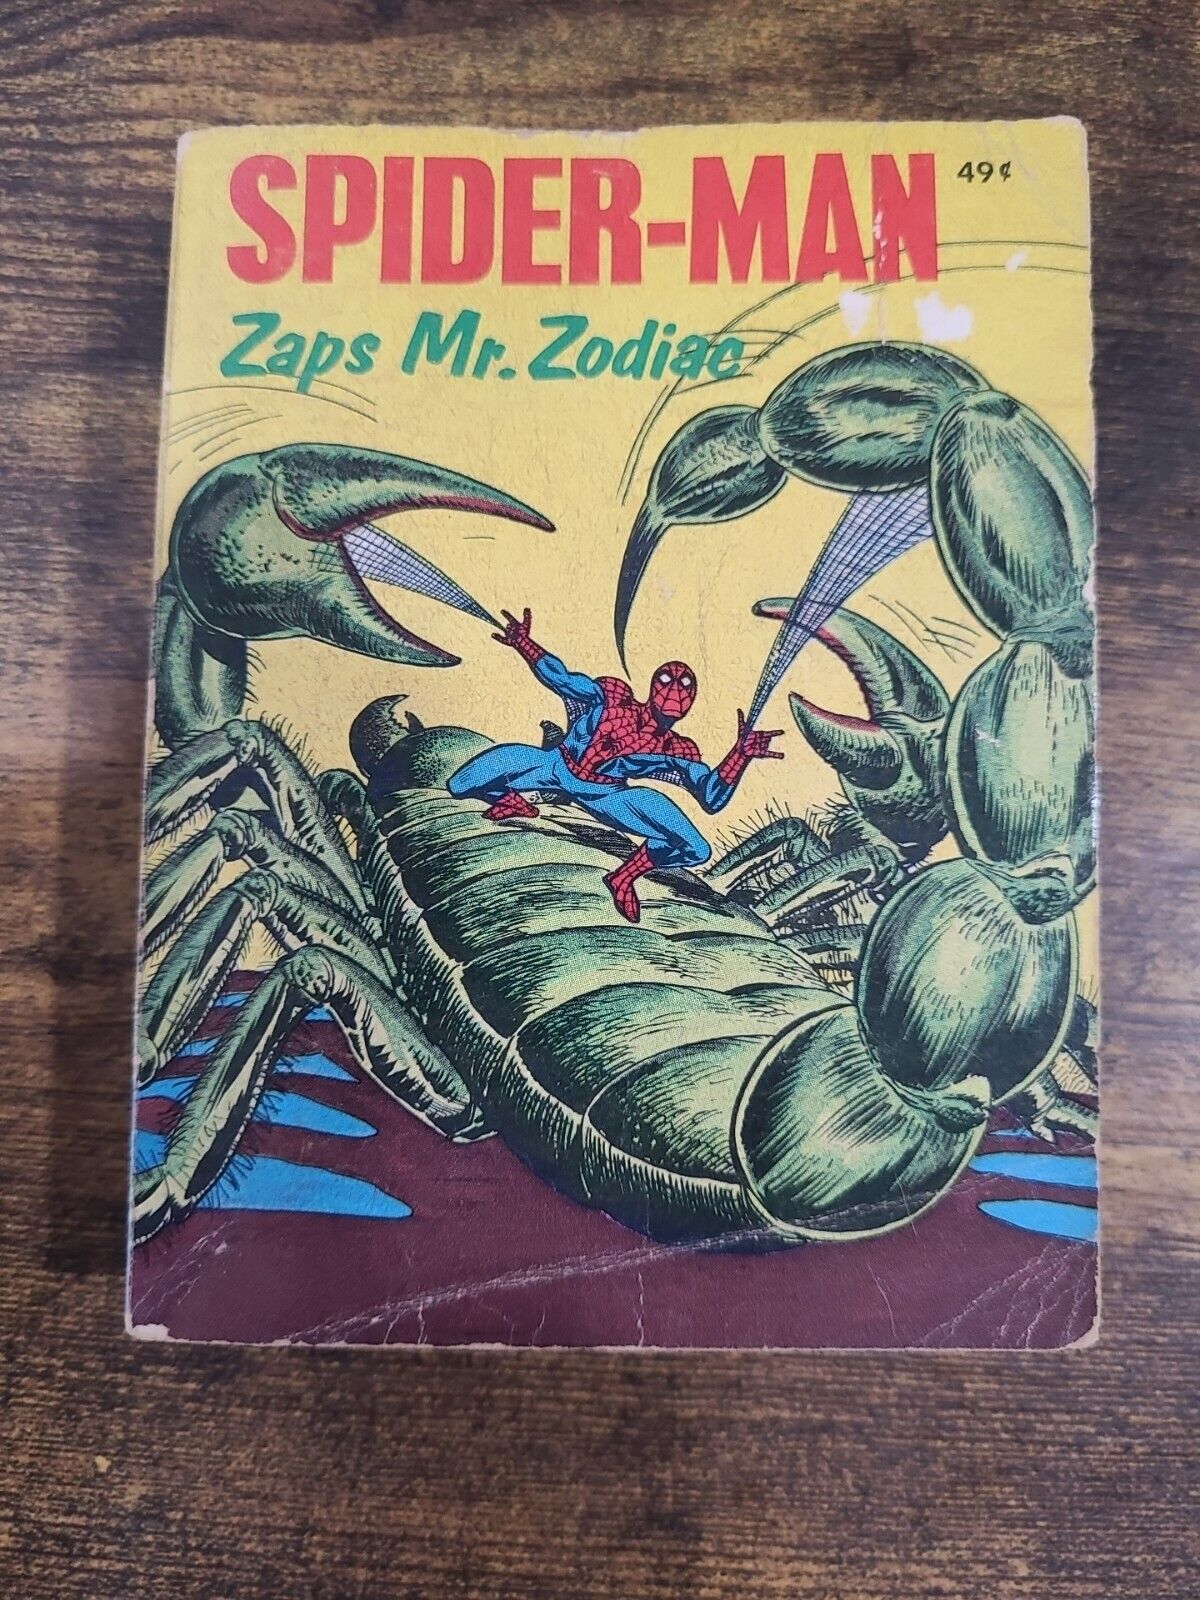 1976 SPIDER-MAN Zaps Mr. Zodiac  A Big Little Book By Whitman #5779